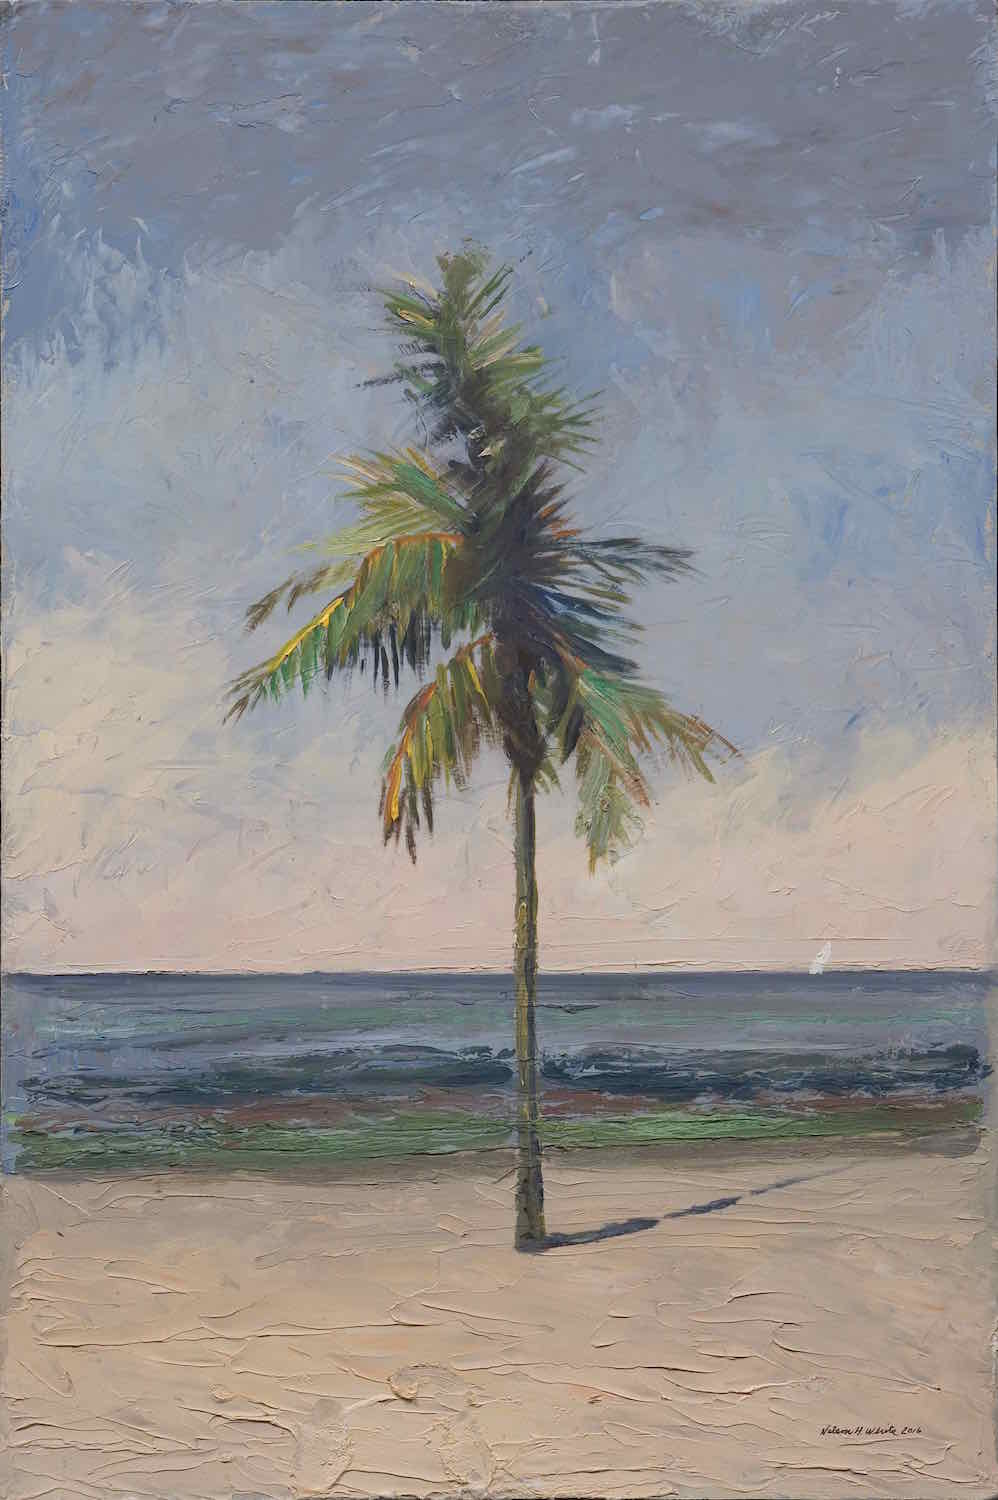 The Palm Tree